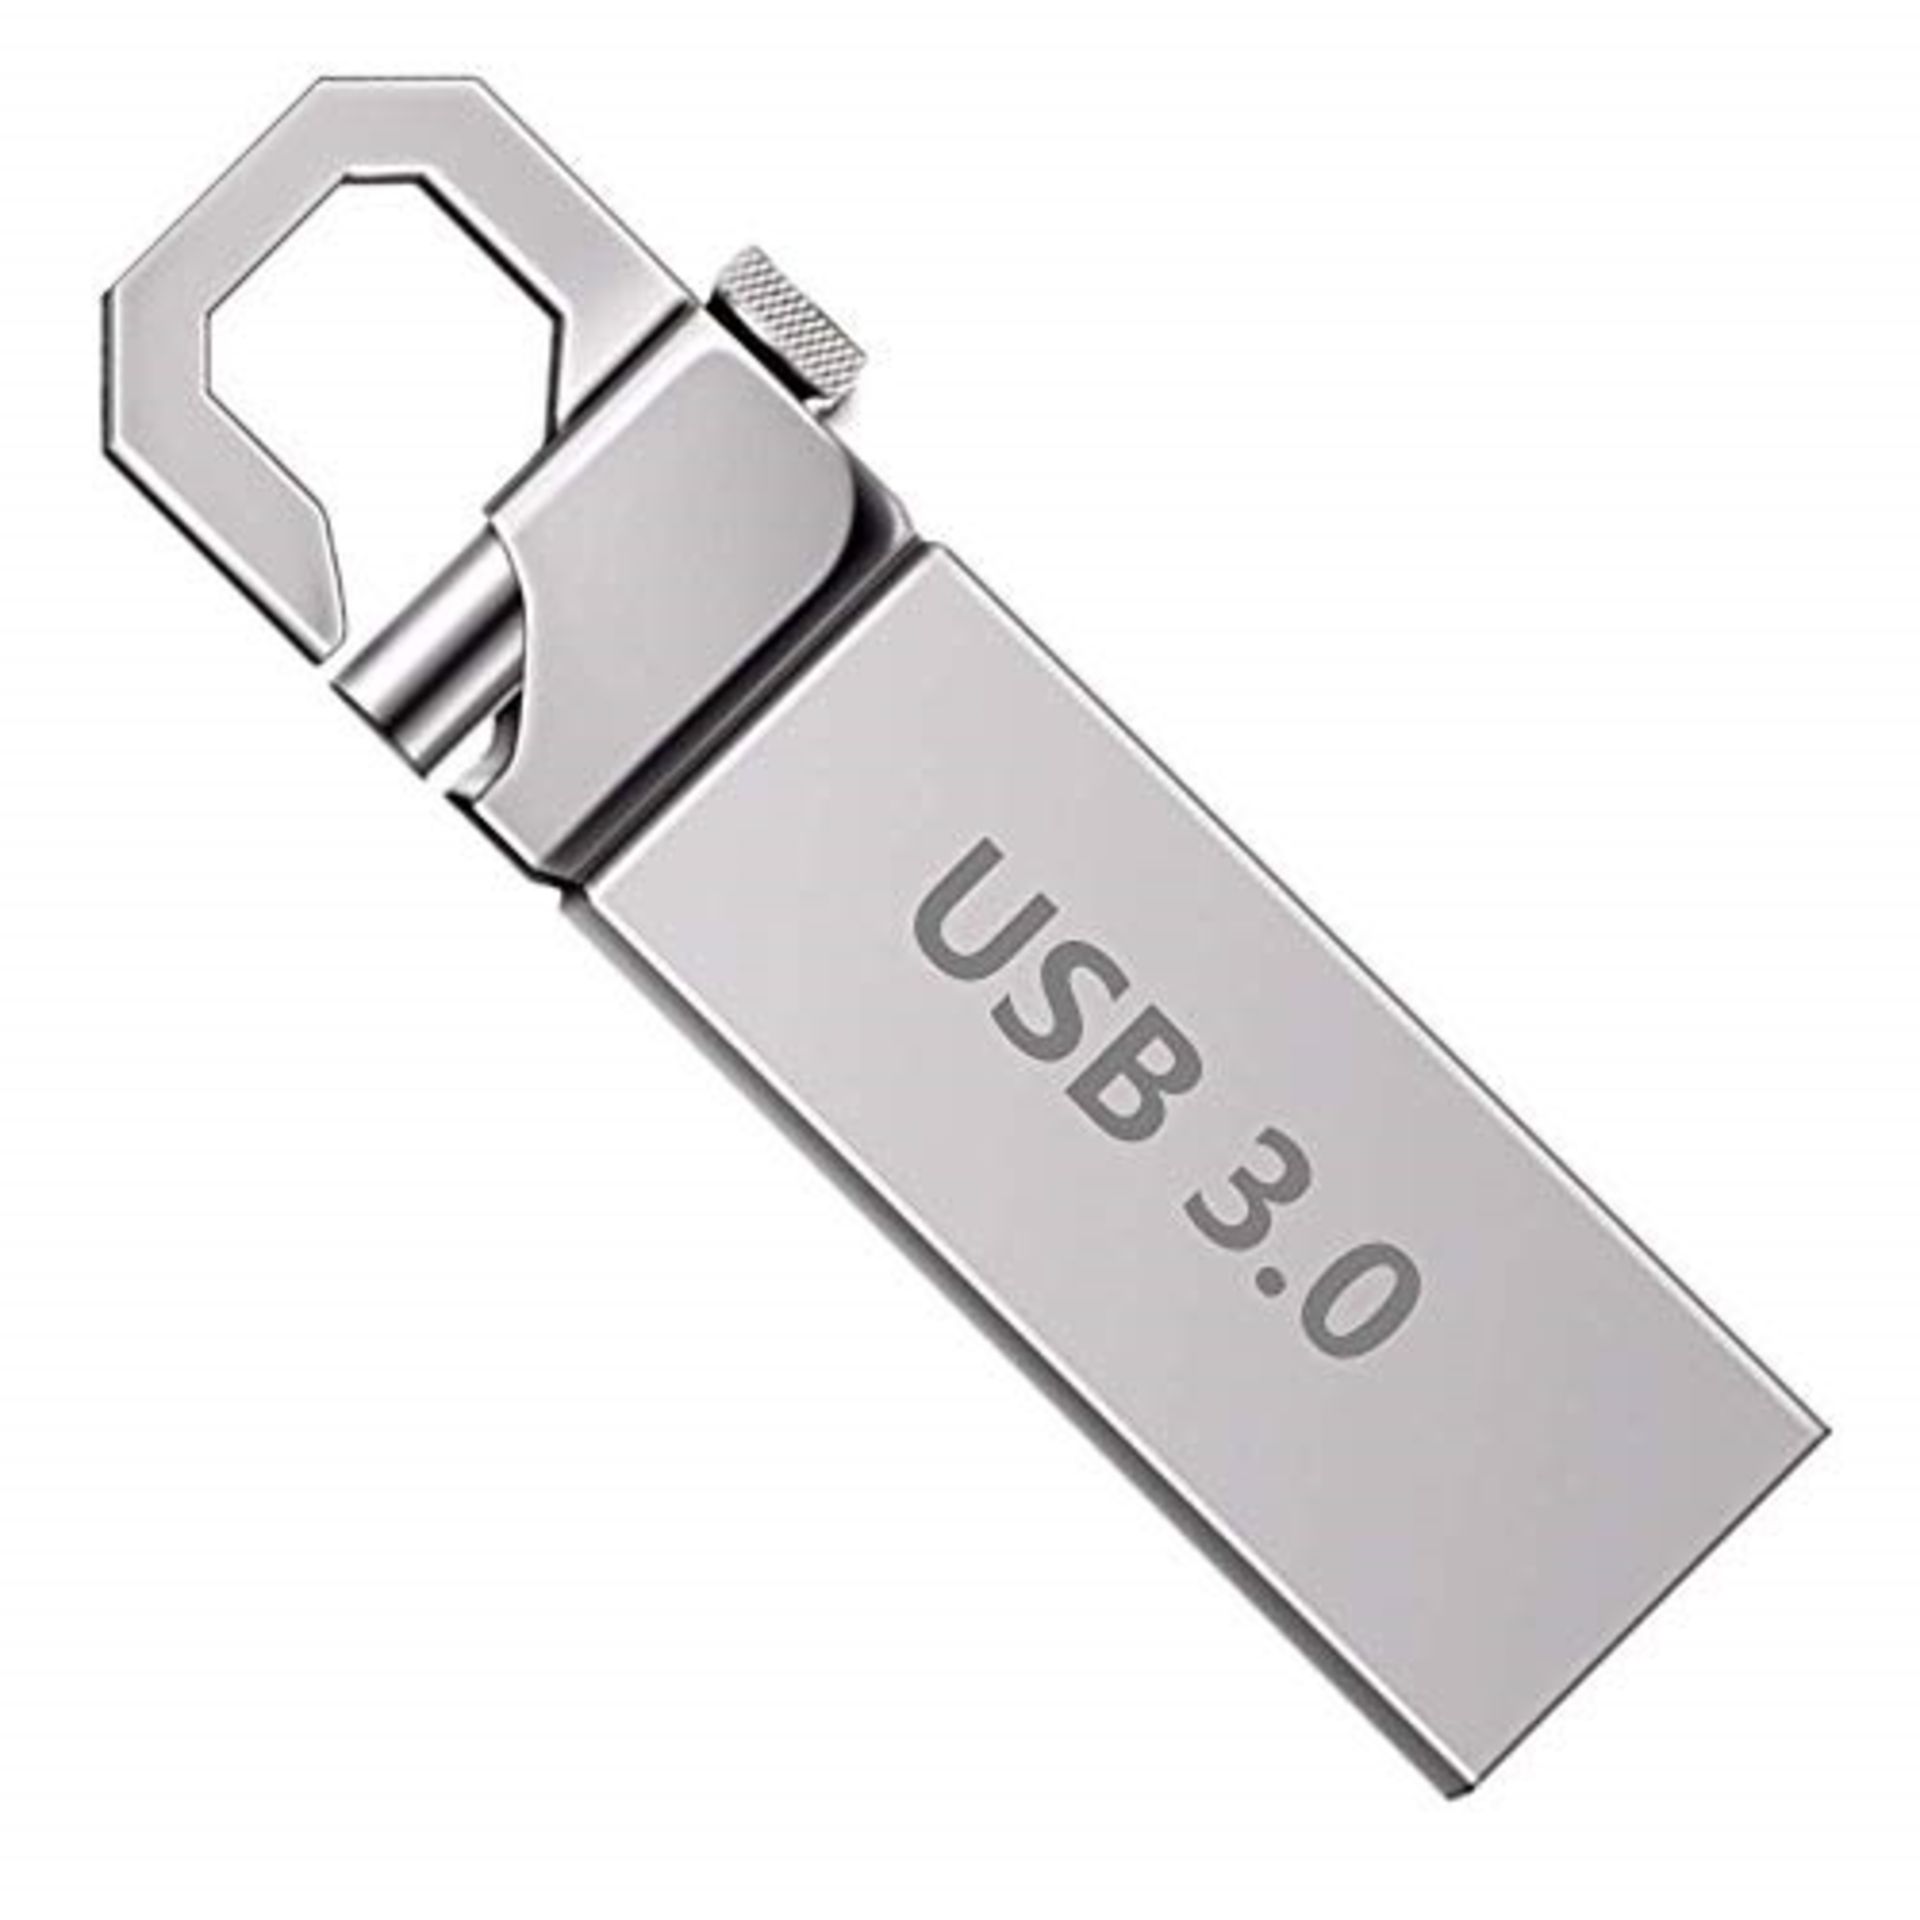 USB Flash Drive Waterproof USB Key Aluminum Pen Drive for PC Laptop Computer Tablet (1